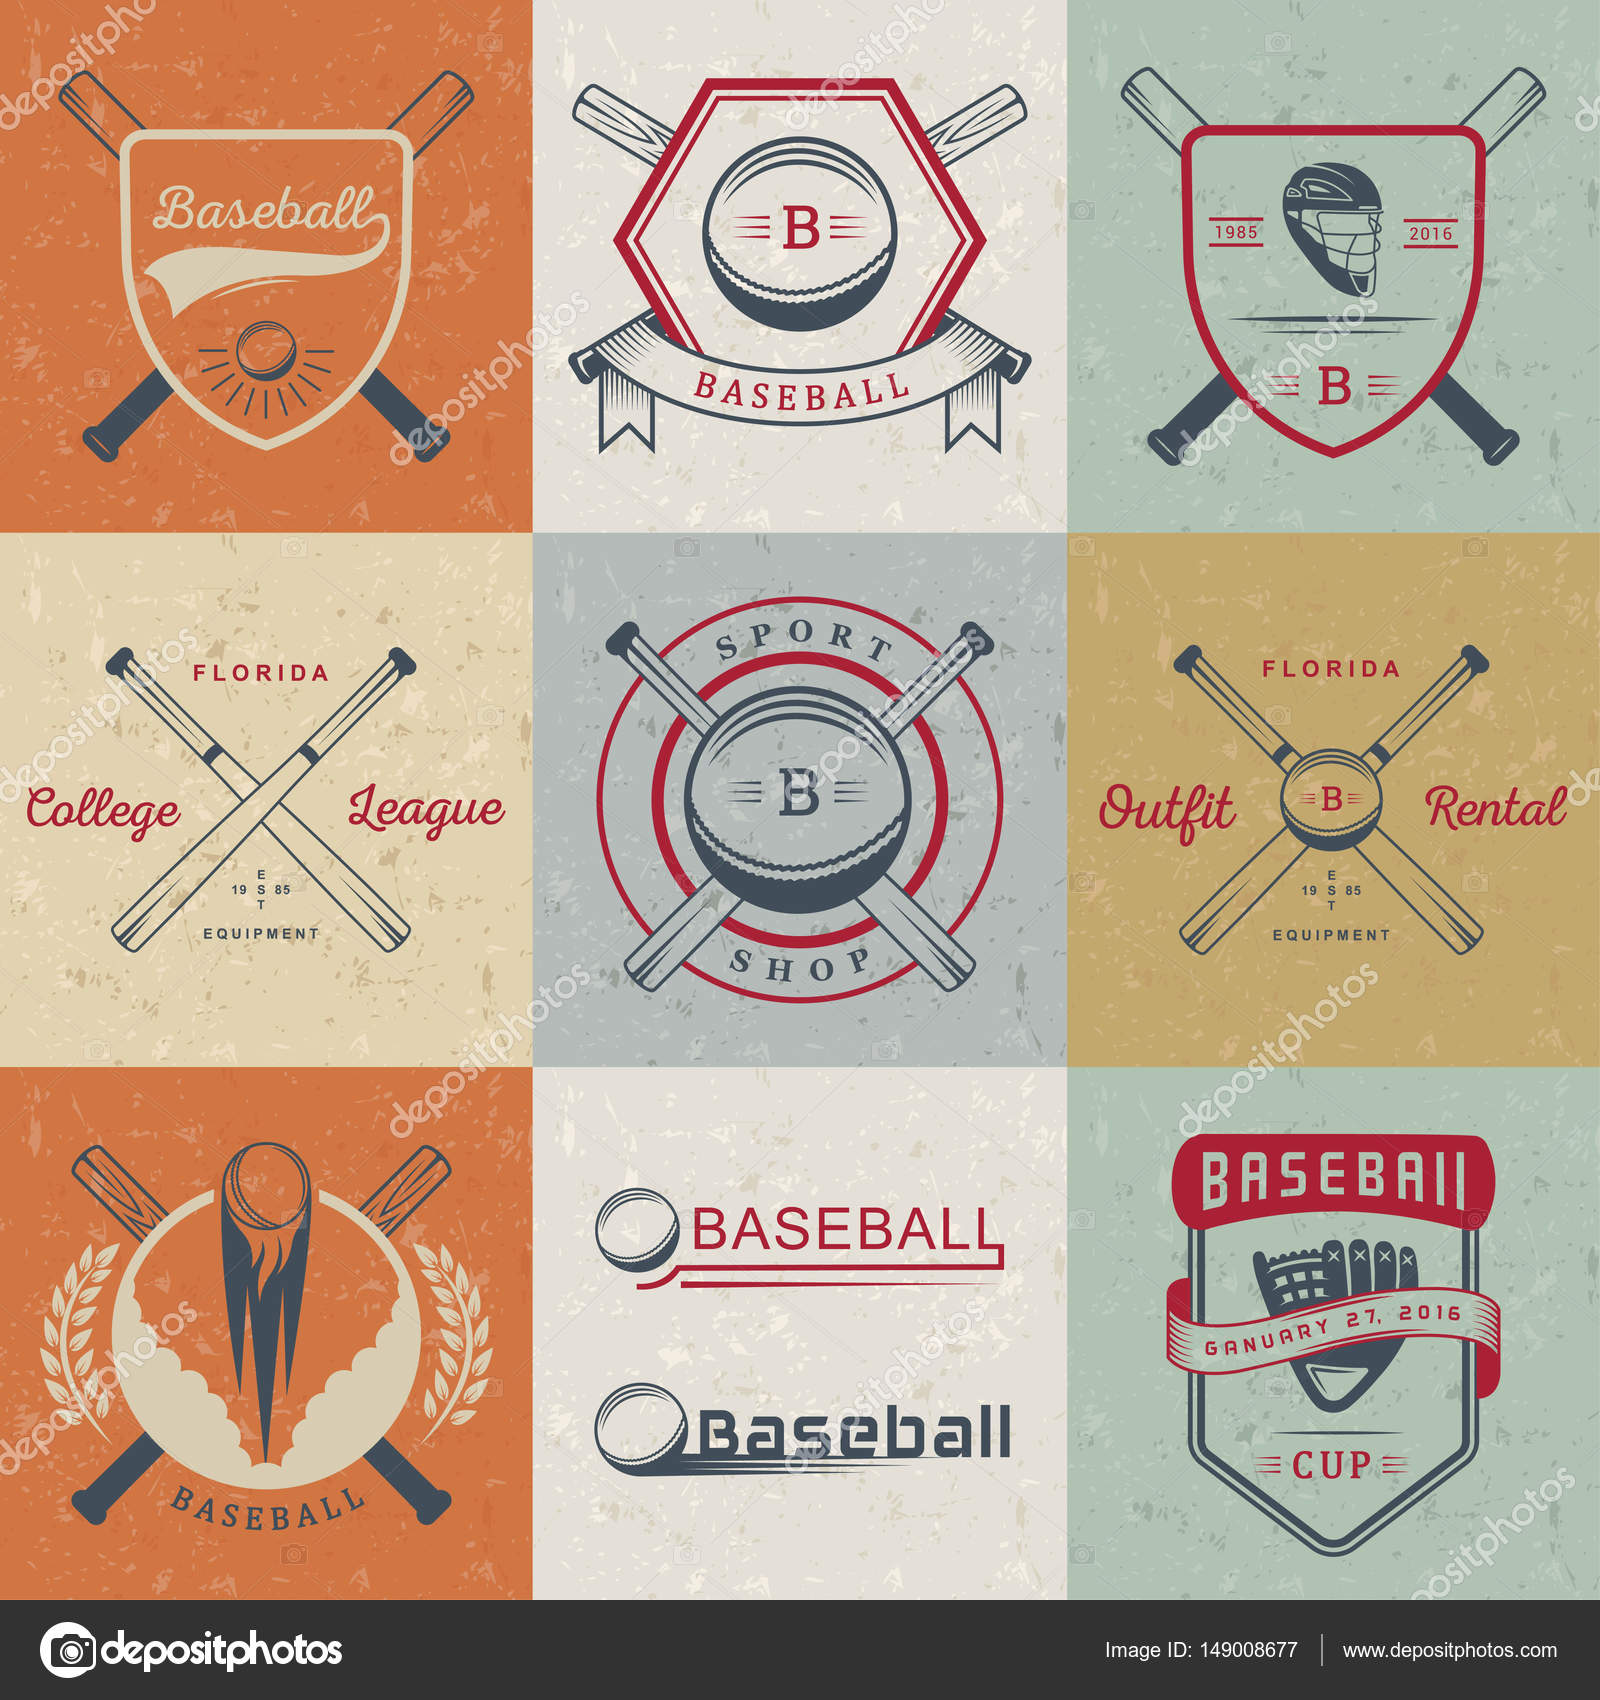 Baseball Best Team Logo Design Set, Tournament, Championship, Sport Team,  Club Identity Retro Badges Vector Illustration, Stock vector